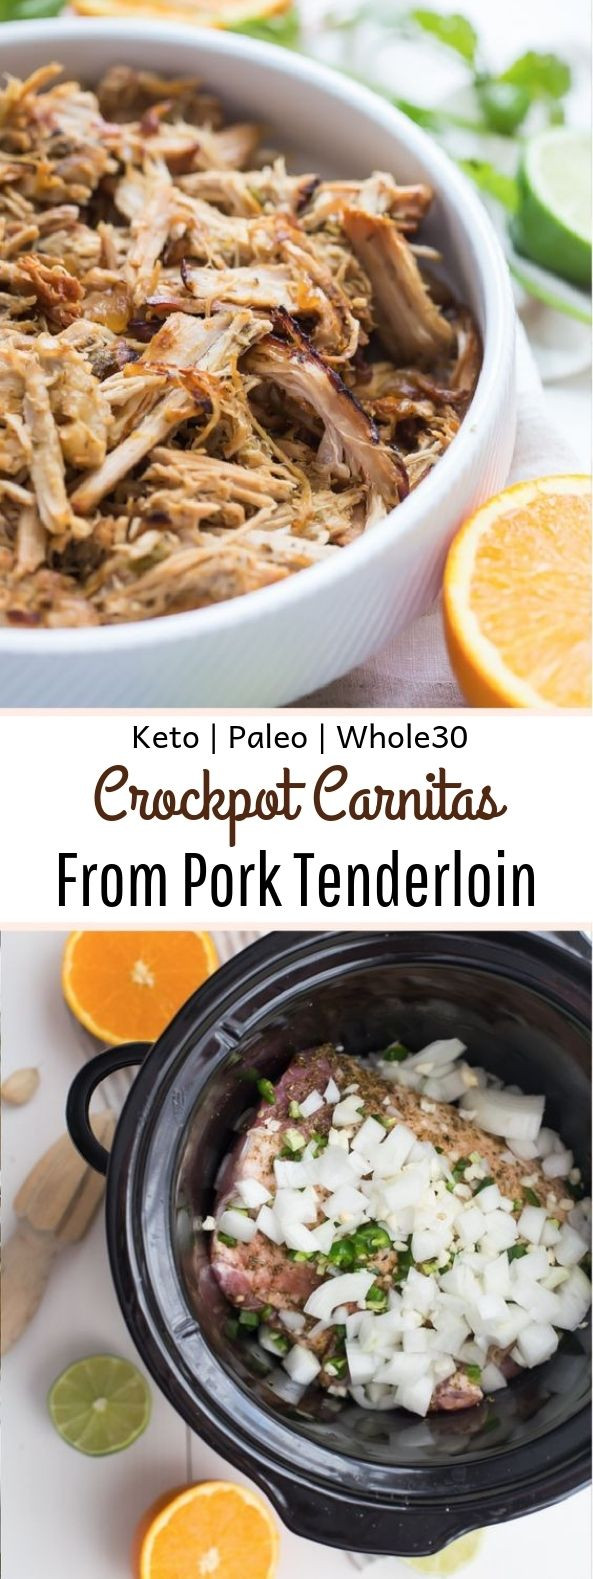 Pork Loin Recipes Crockpot Keto
 Crockpot Carnitas from Pork Tenderloin Paleo Whole30